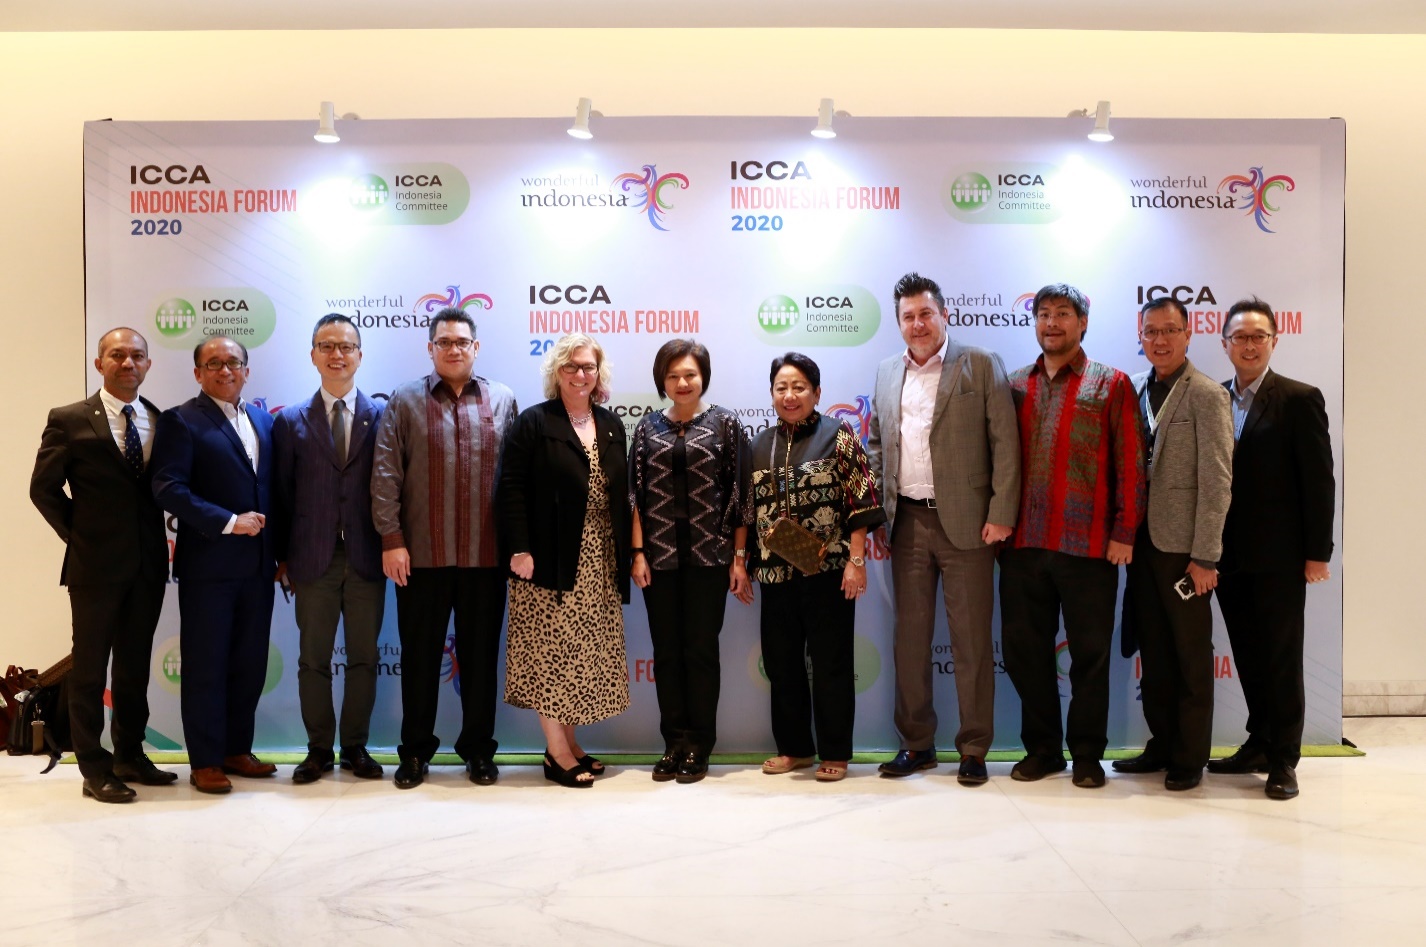 ICCA Indonesia Forum 2020, potencializa la industria MICE